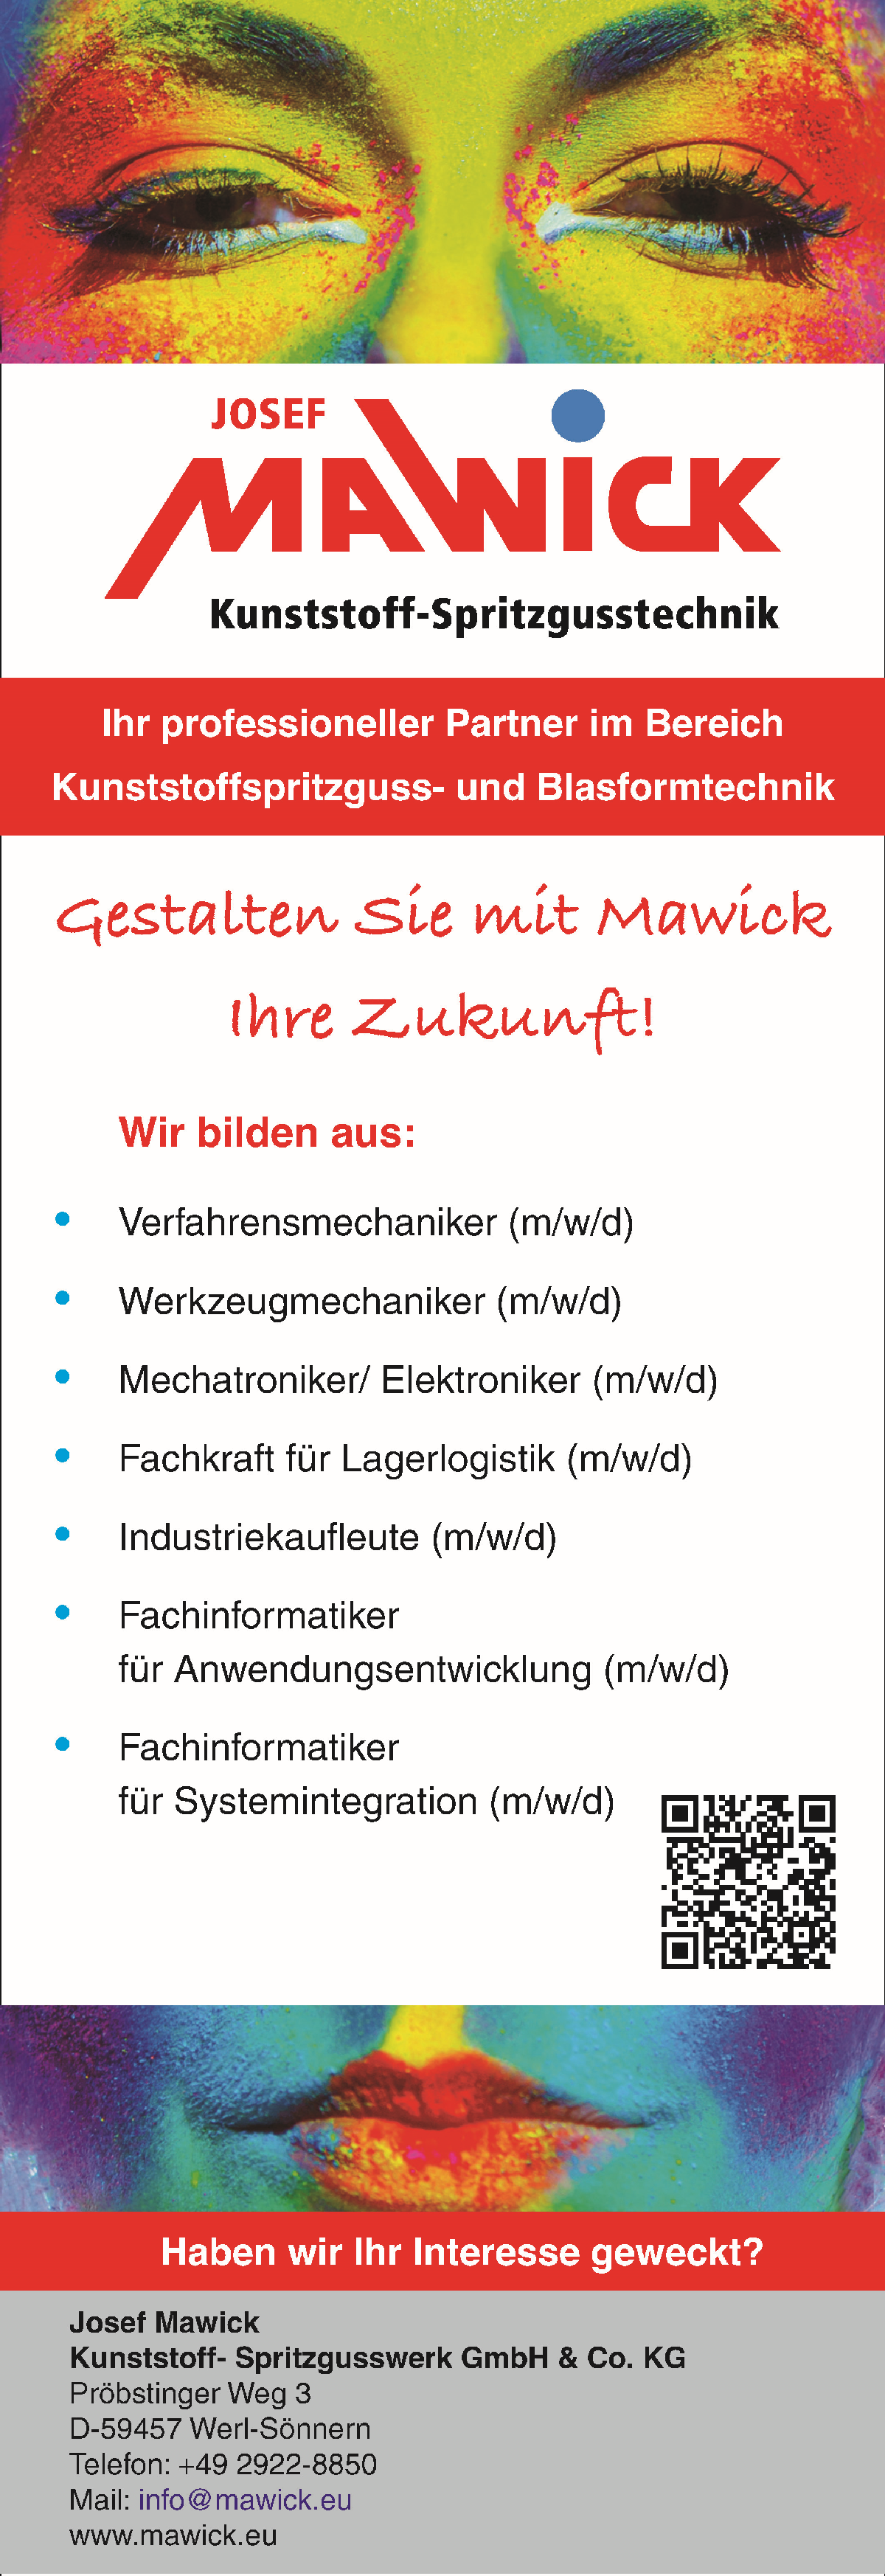 Josef Mawick Kunststoff- Spritzgusswerk GmbH & Co. KG